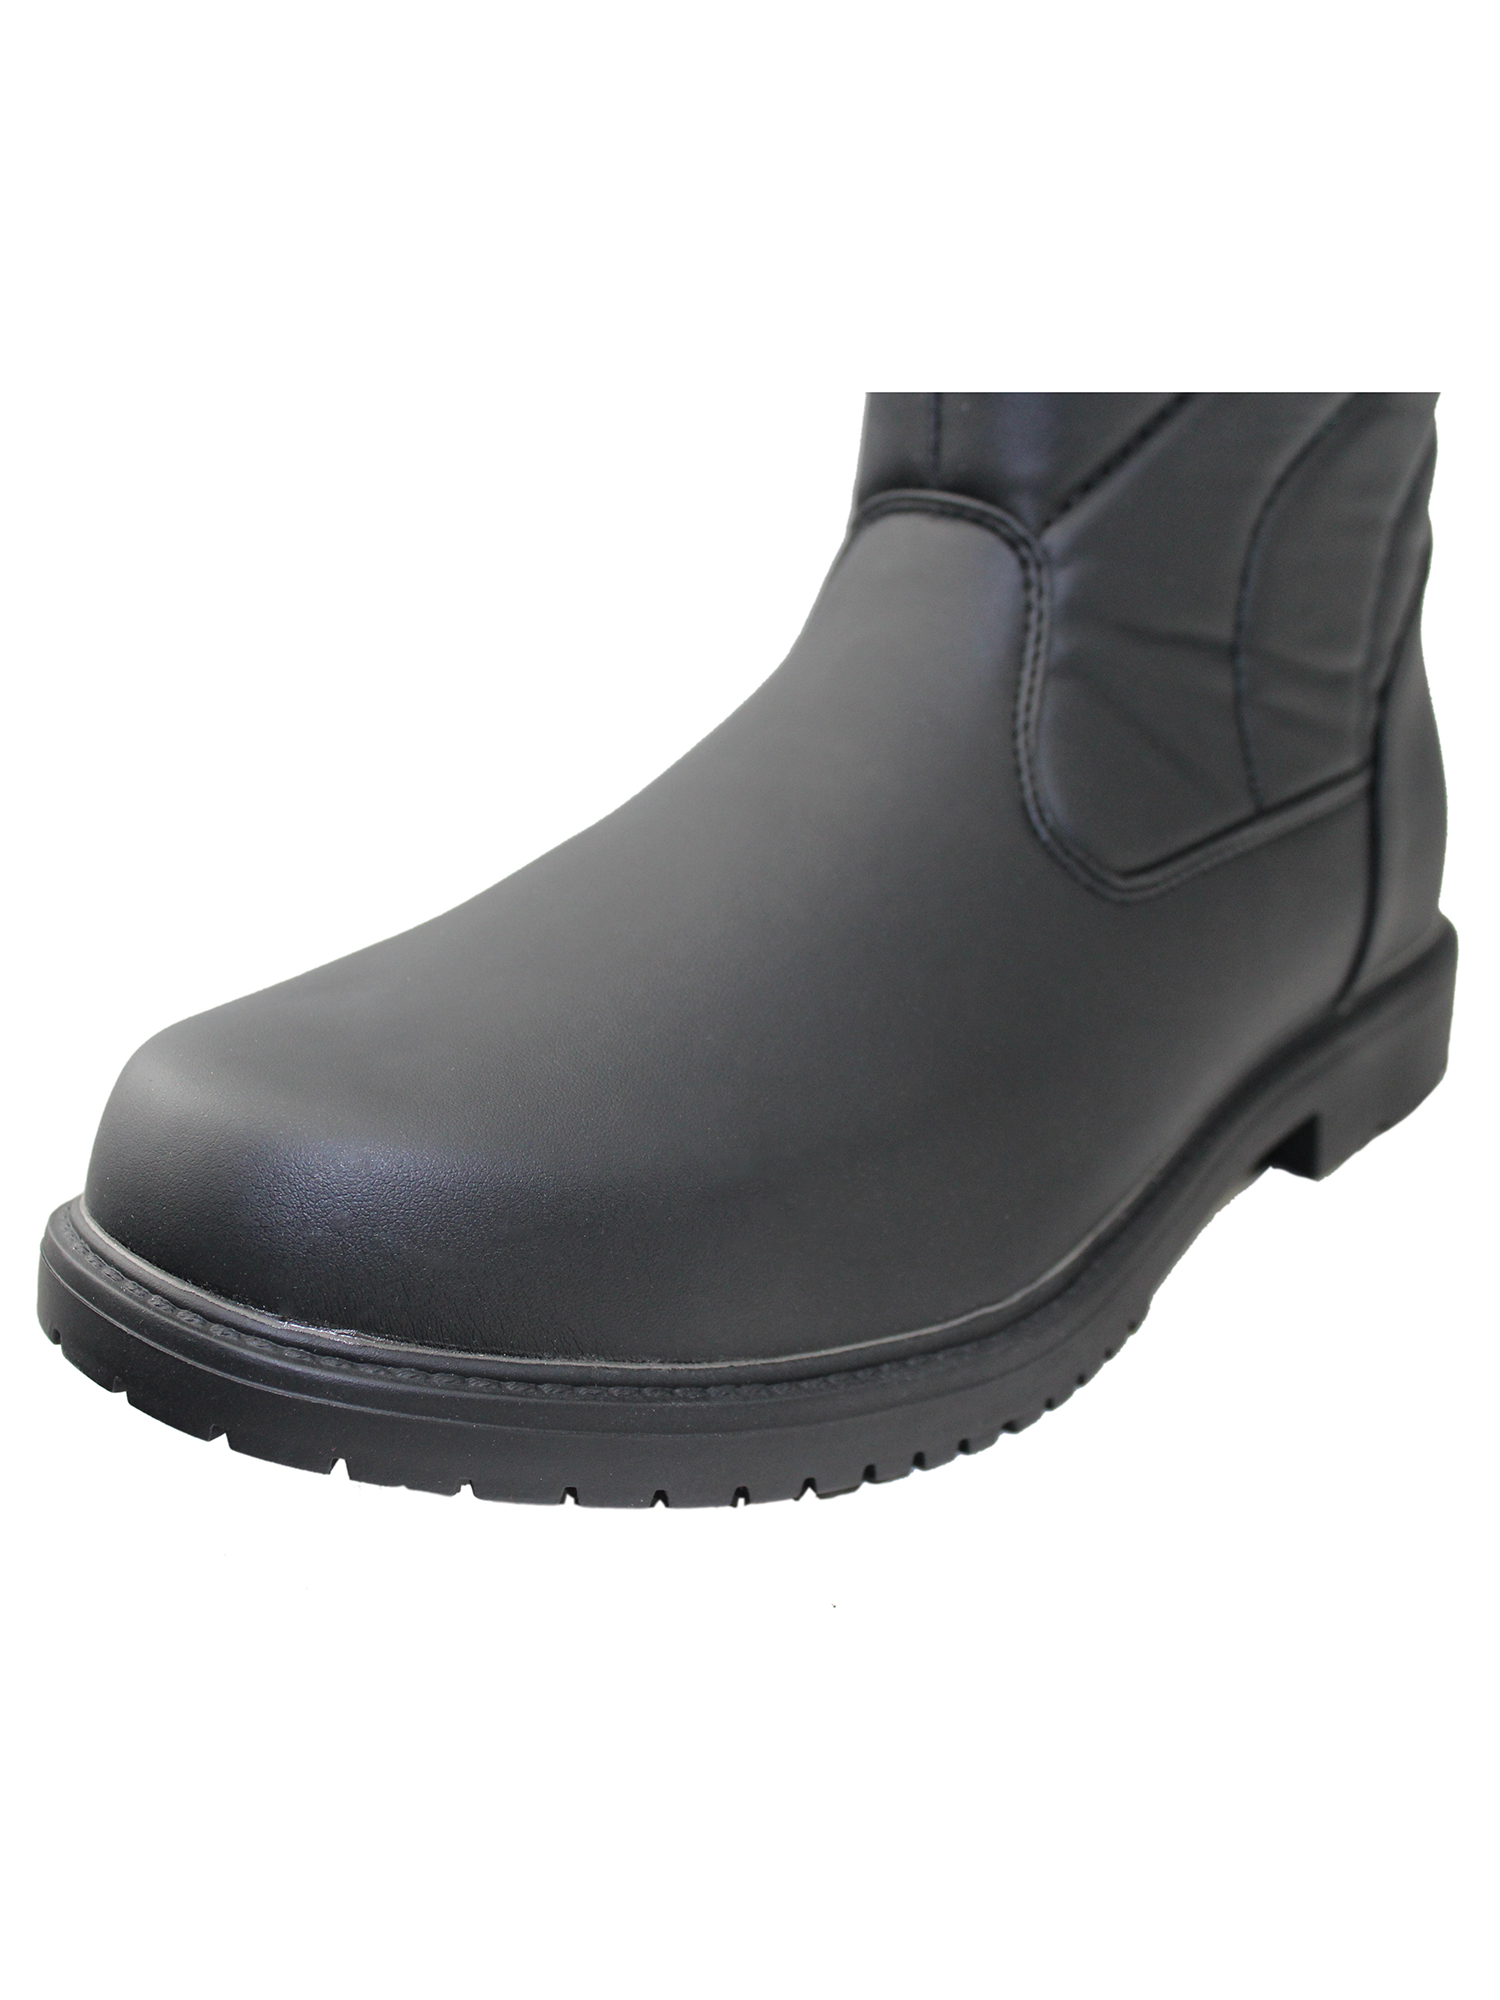 Tanleewa Men's Winter Boots Fur Lining Waterproof Non Slip Snow Boots Side Zipper Shoe Size 7 - image 4 of 6